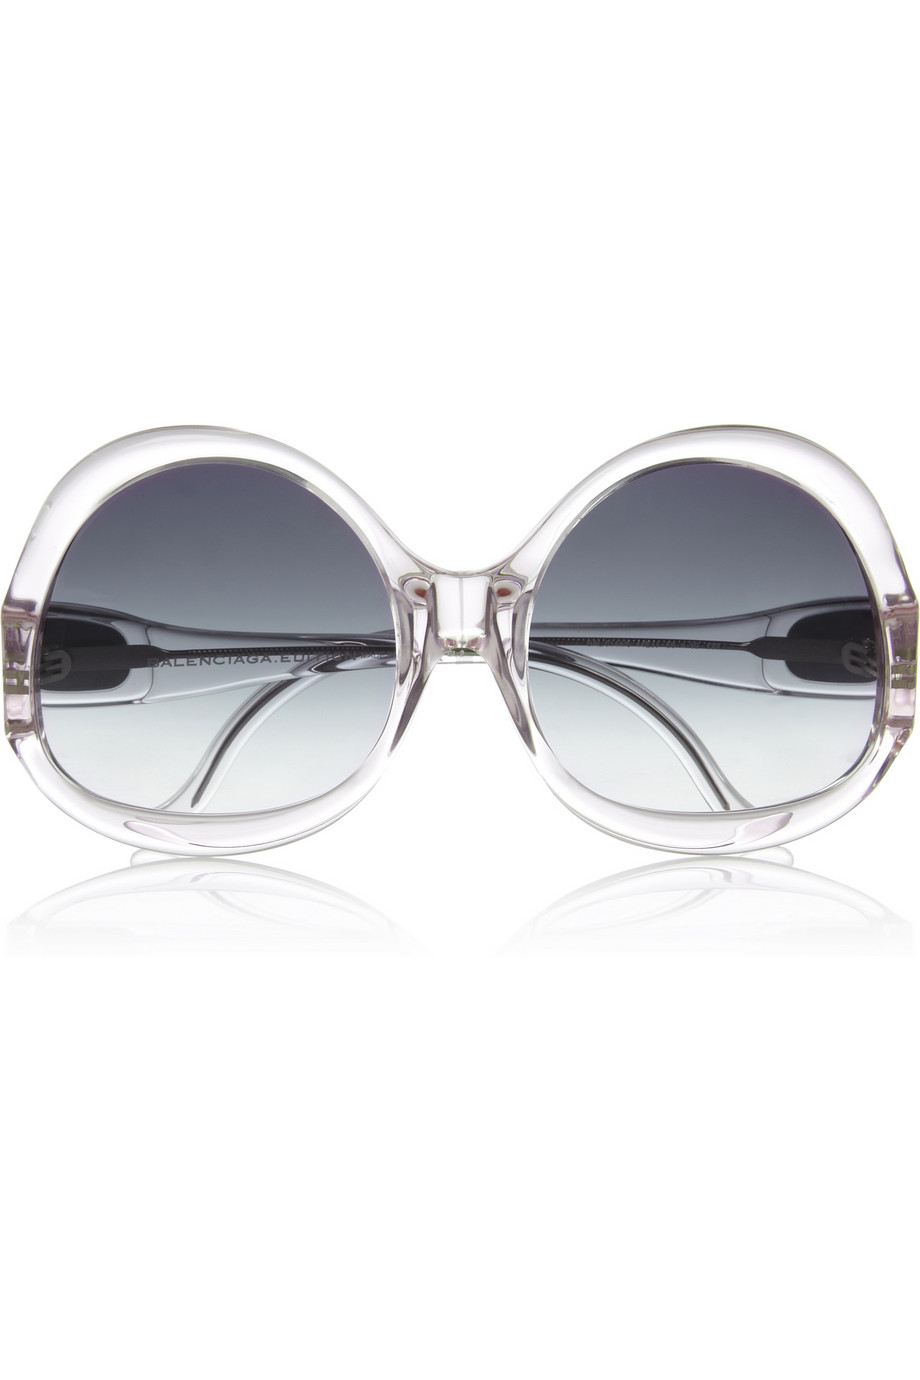 Balenciaga Oversized Round Frame Acetate Sunglasses in Blue (White) - Lyst